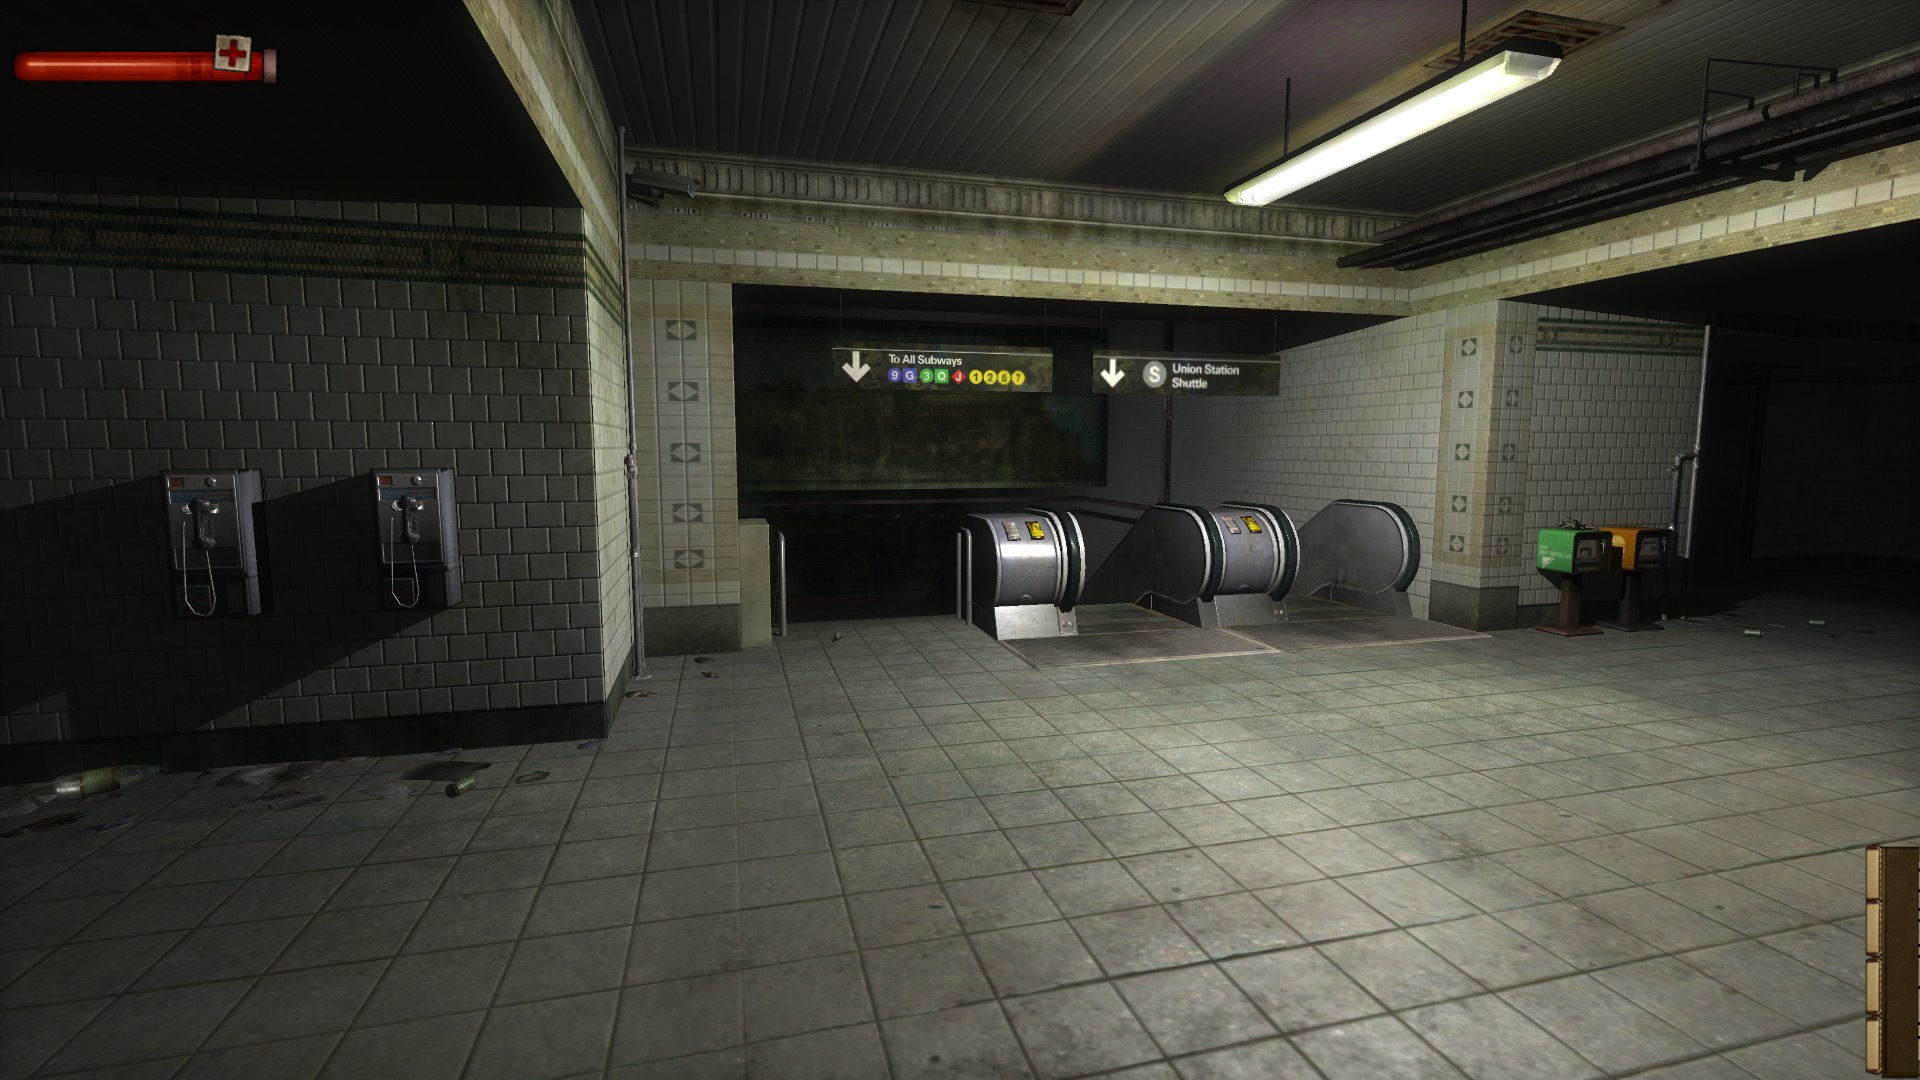 Screenshot from Condemned of a subway escalator